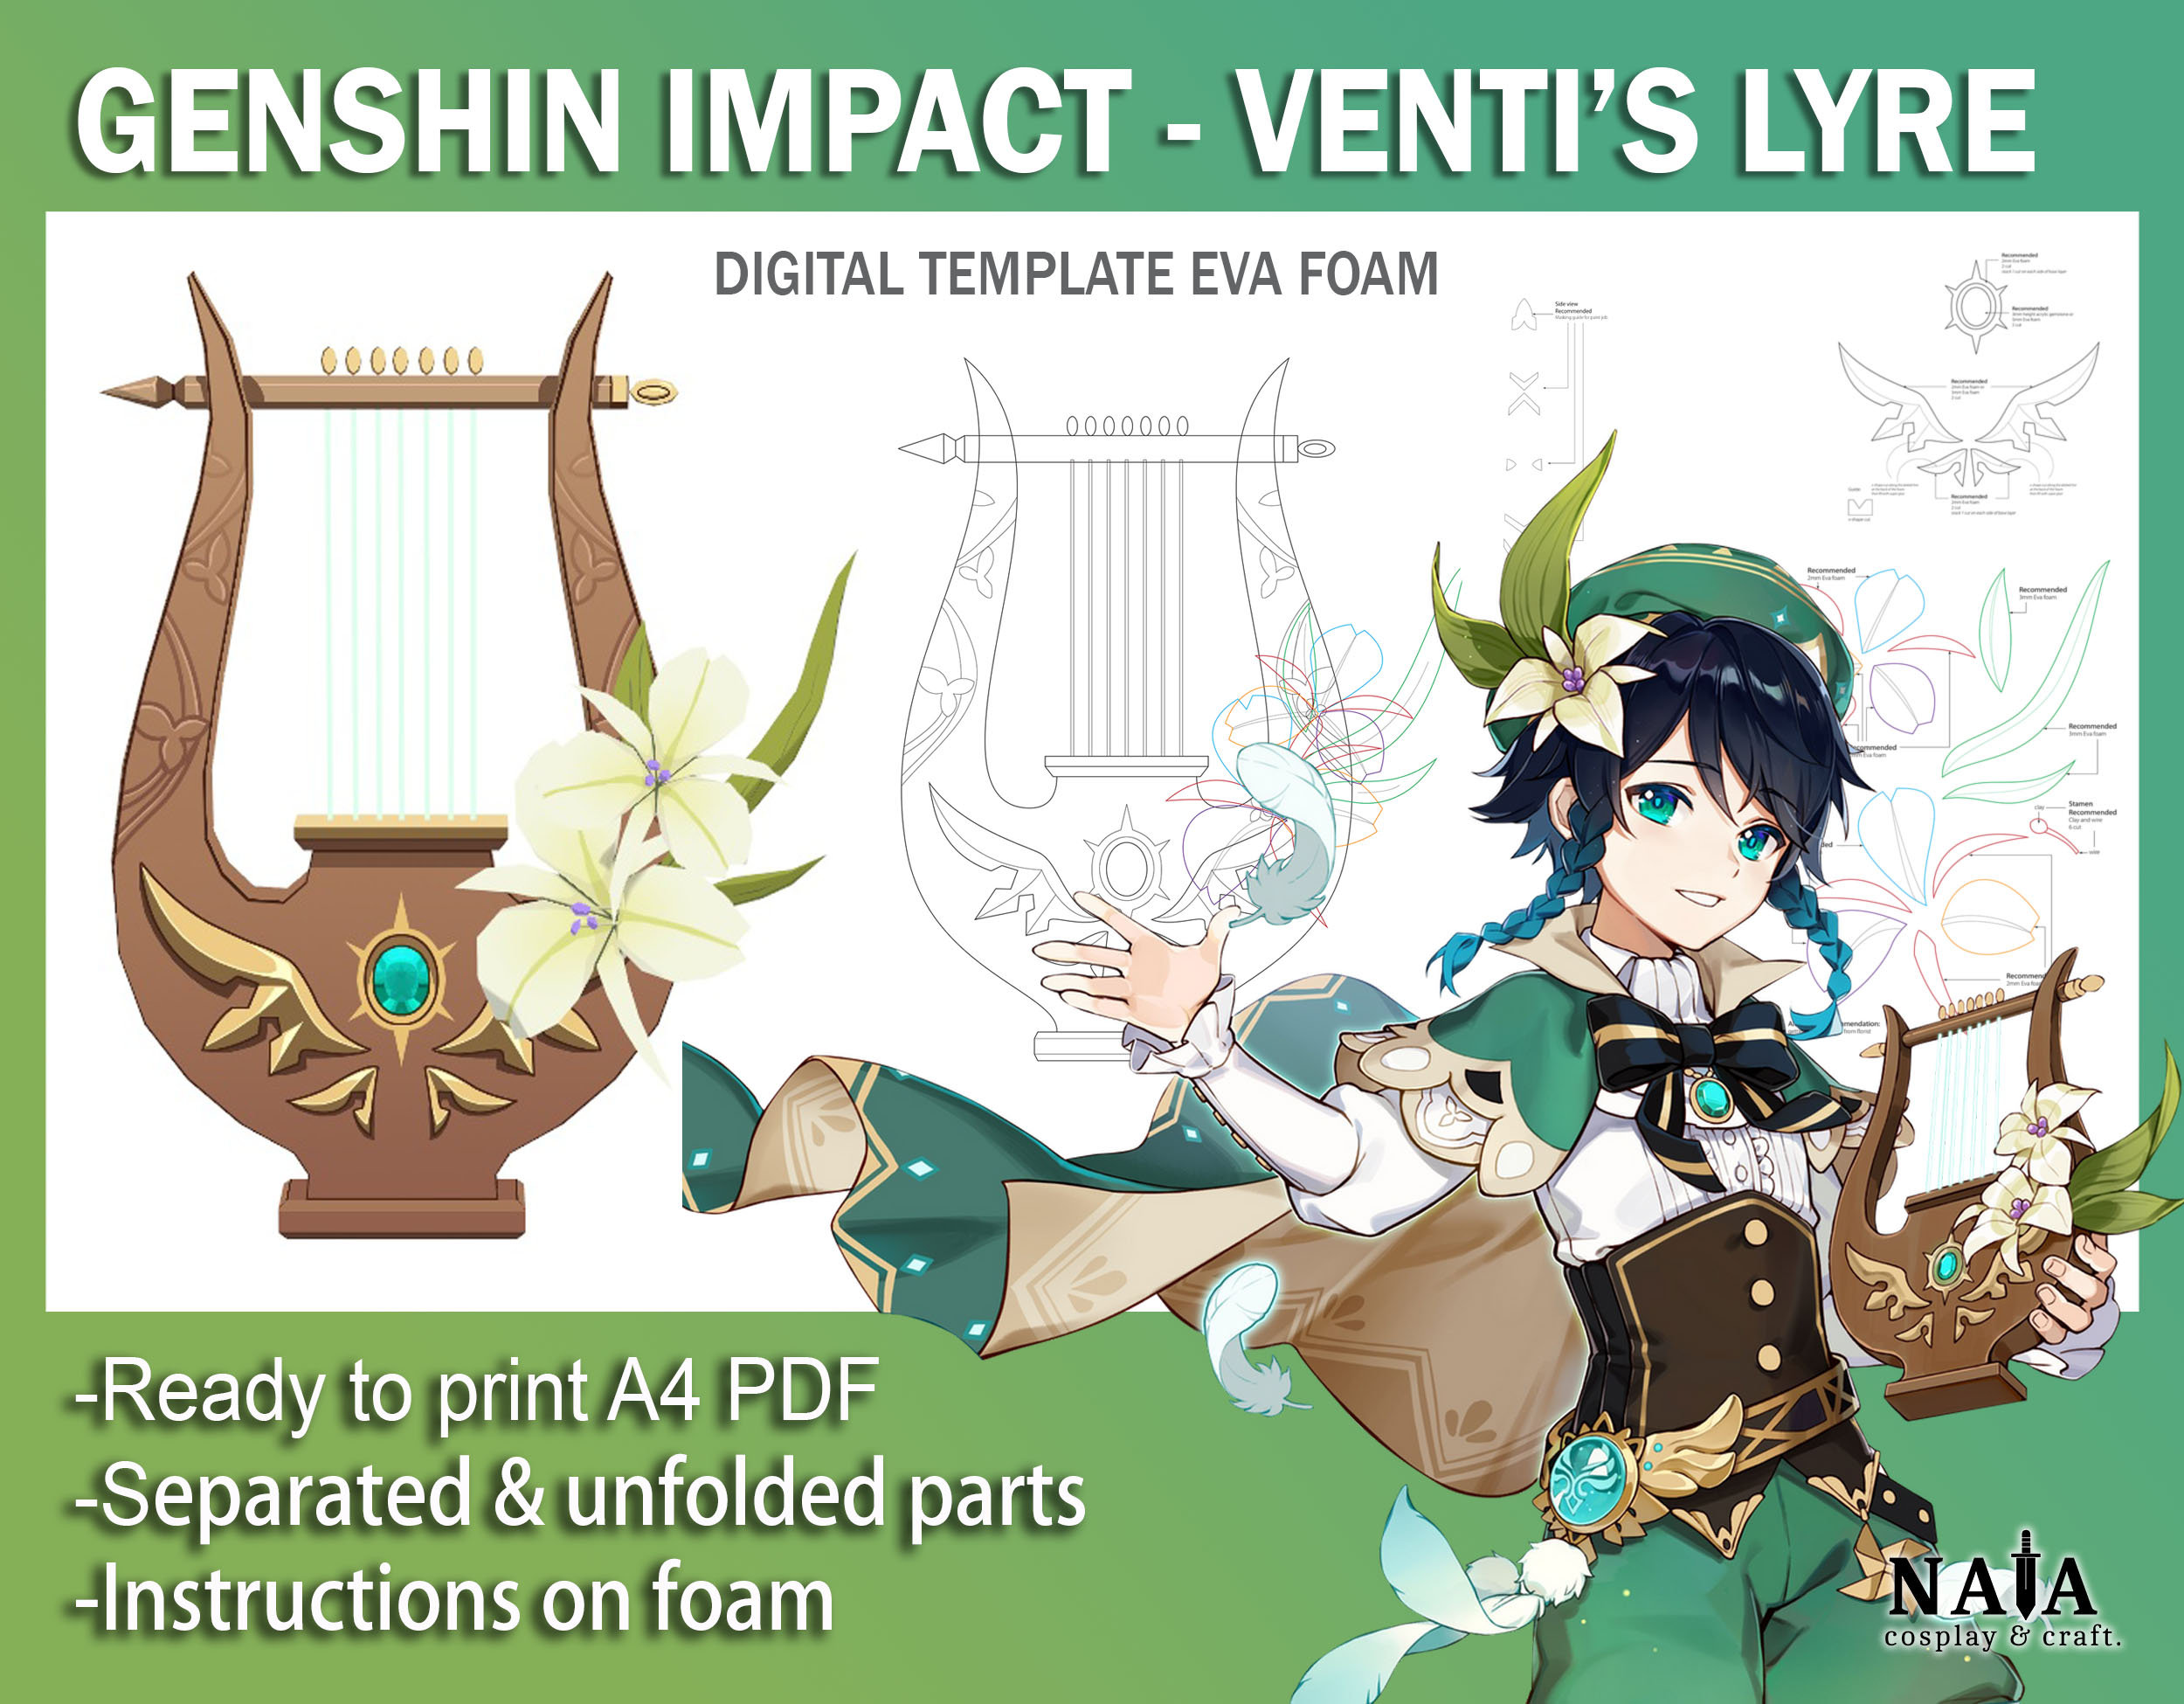 Venti Accessories Genshin Impact cosplay pattern blueprint